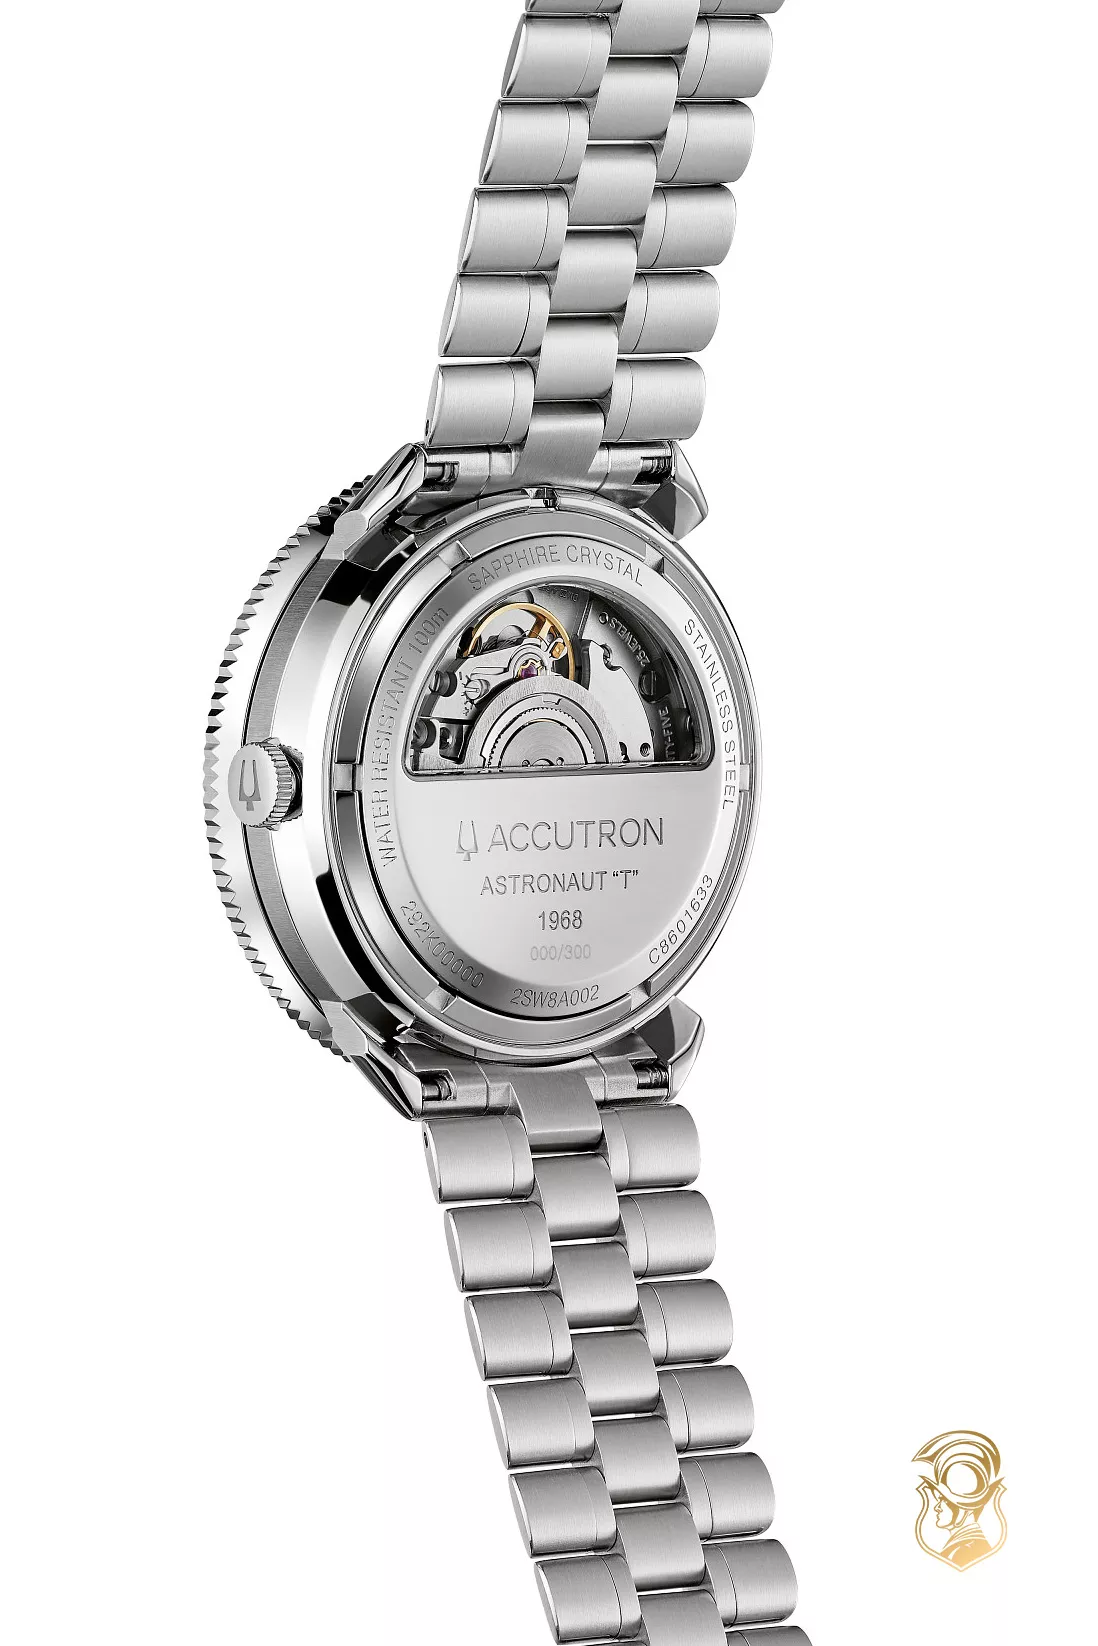 Bulova Accutron Astronaut T Limited Watch 39mm